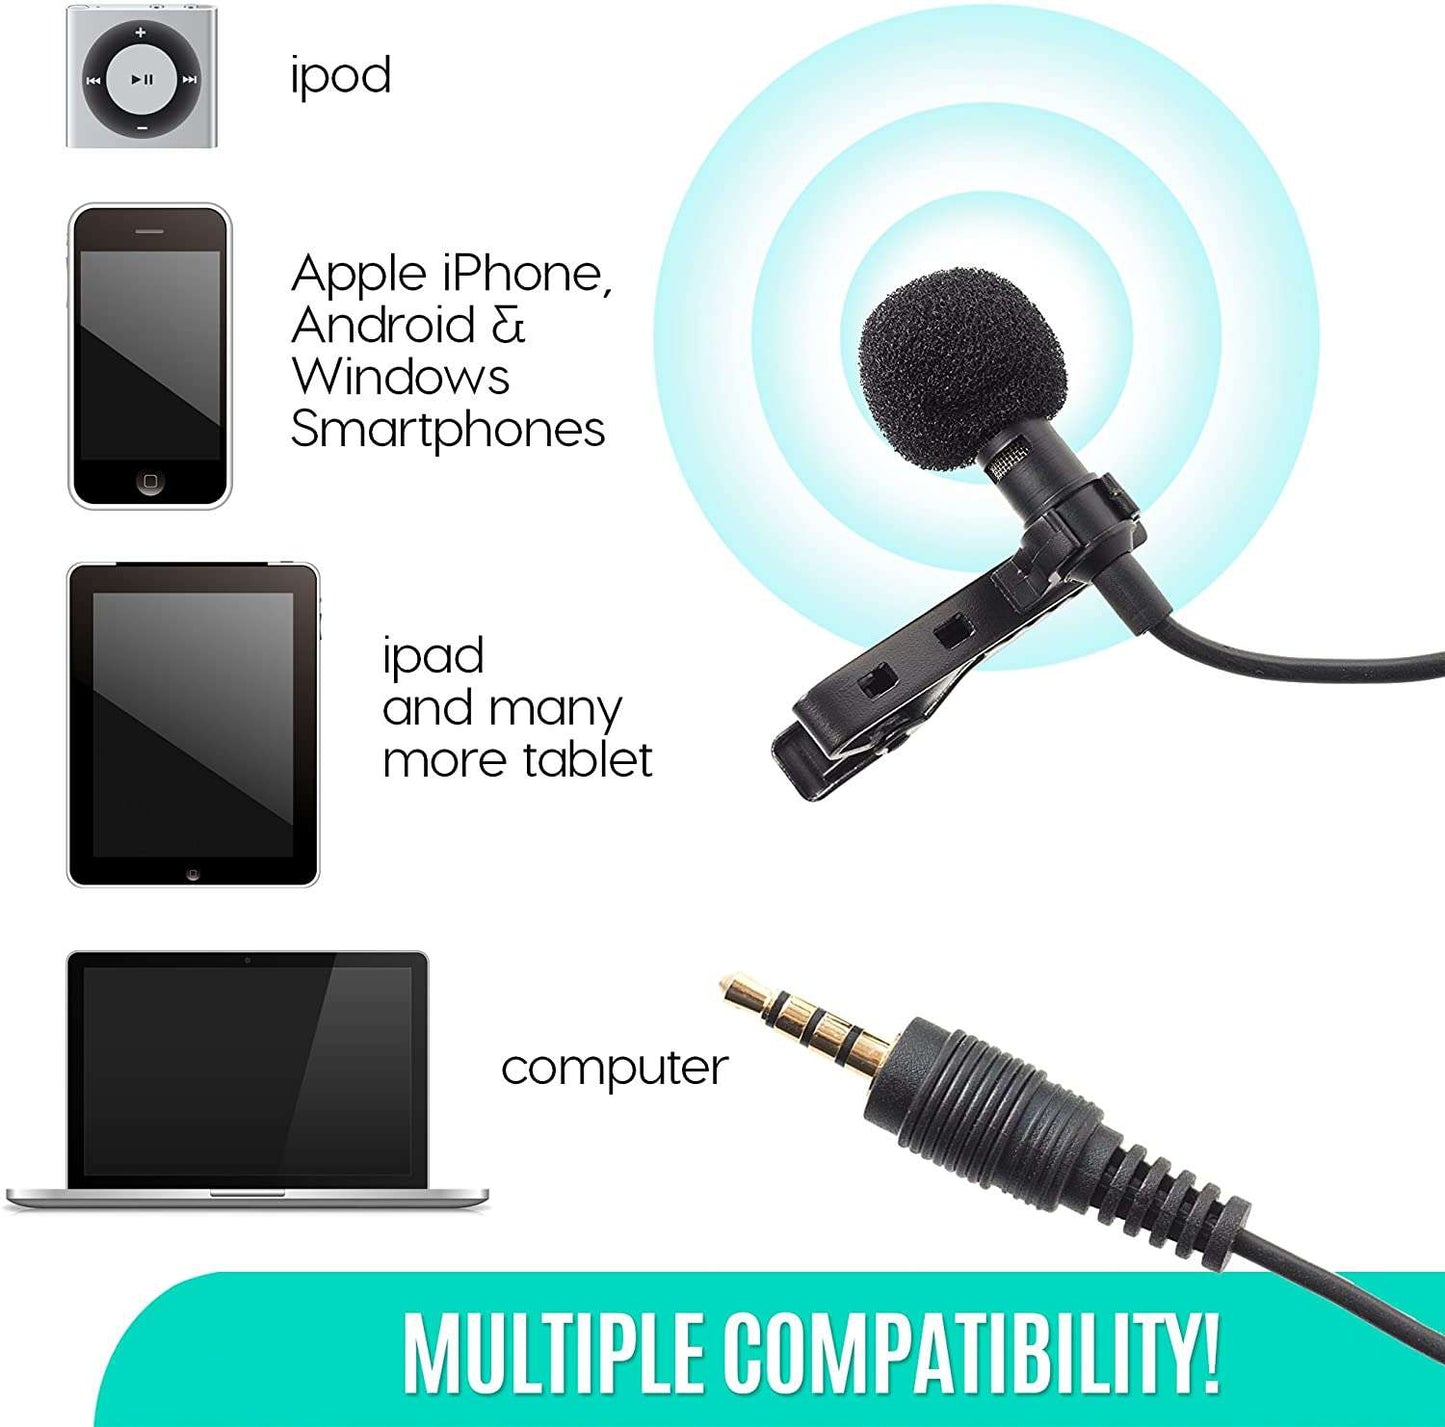 Hridz Clip-on Lapel Mini Lavalier Mic Microphone - 3.5mm Mic for PC, Phone, DSLR